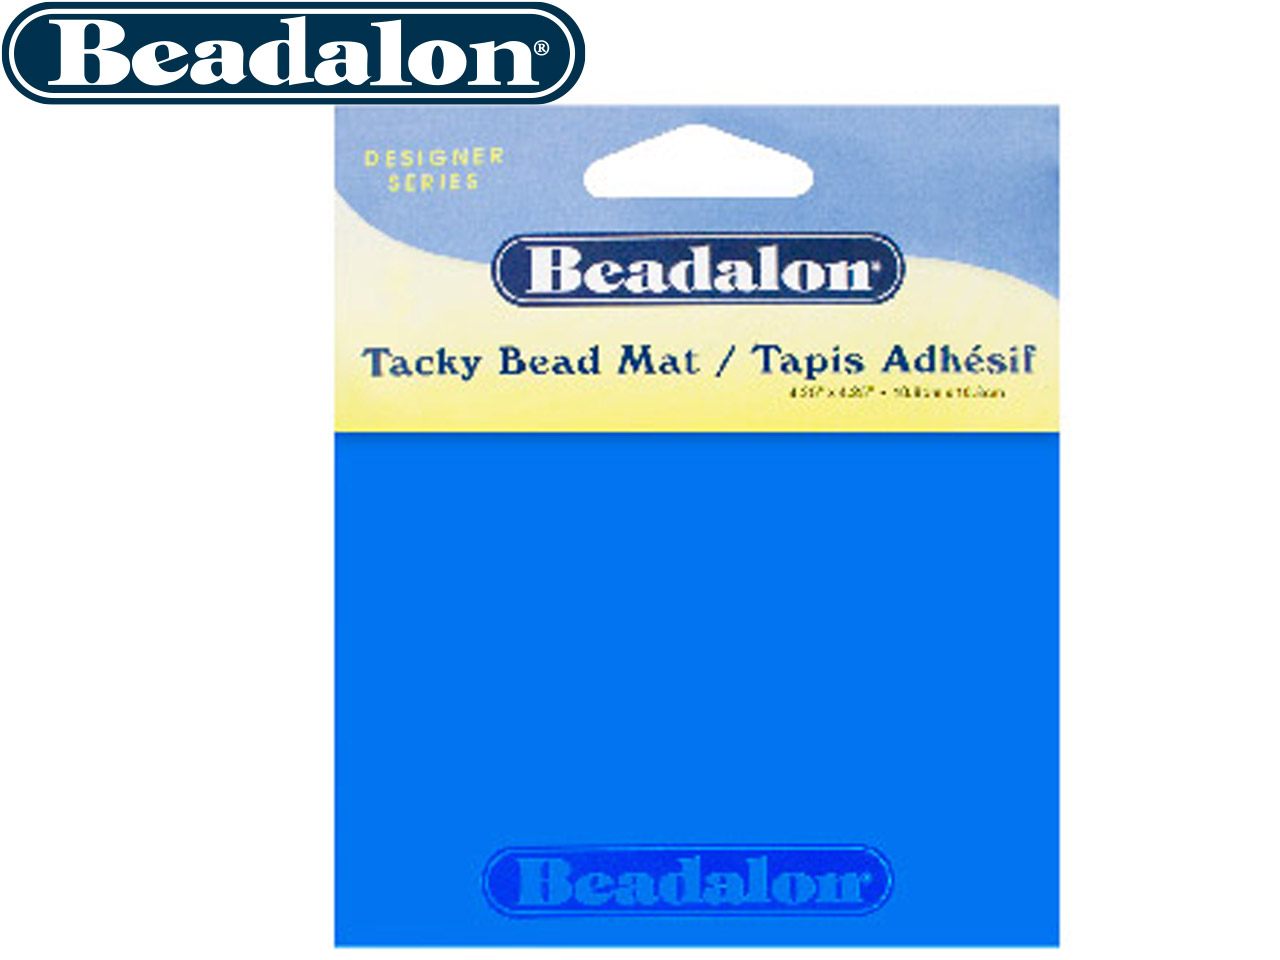 Beadalon Sticky Bead Mat - Standard Image - 2